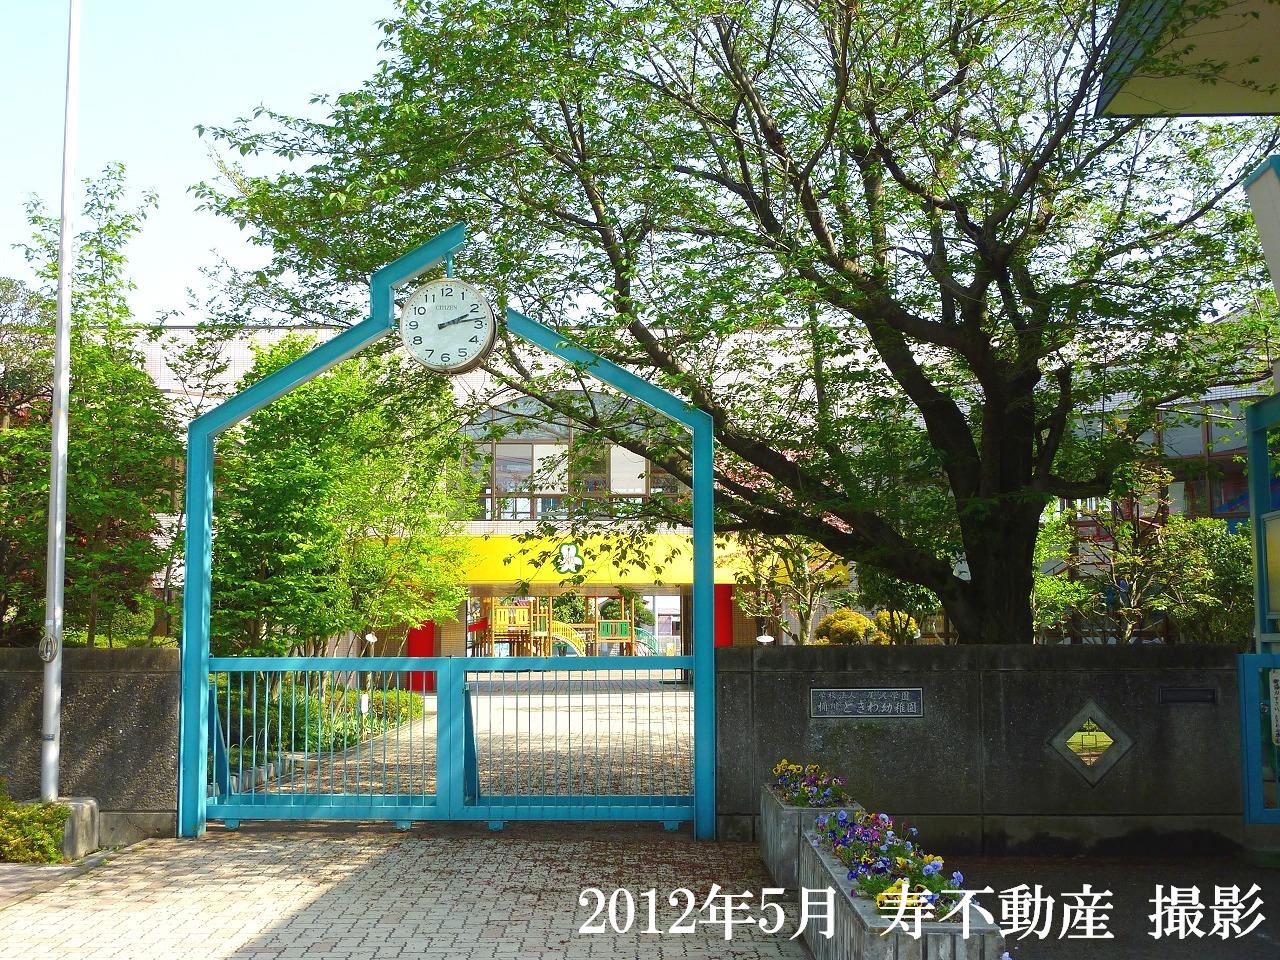 kindergarten ・ Nursery. Okegawa Tokiwa kindergarten (kindergarten ・ 618m to the nursery)